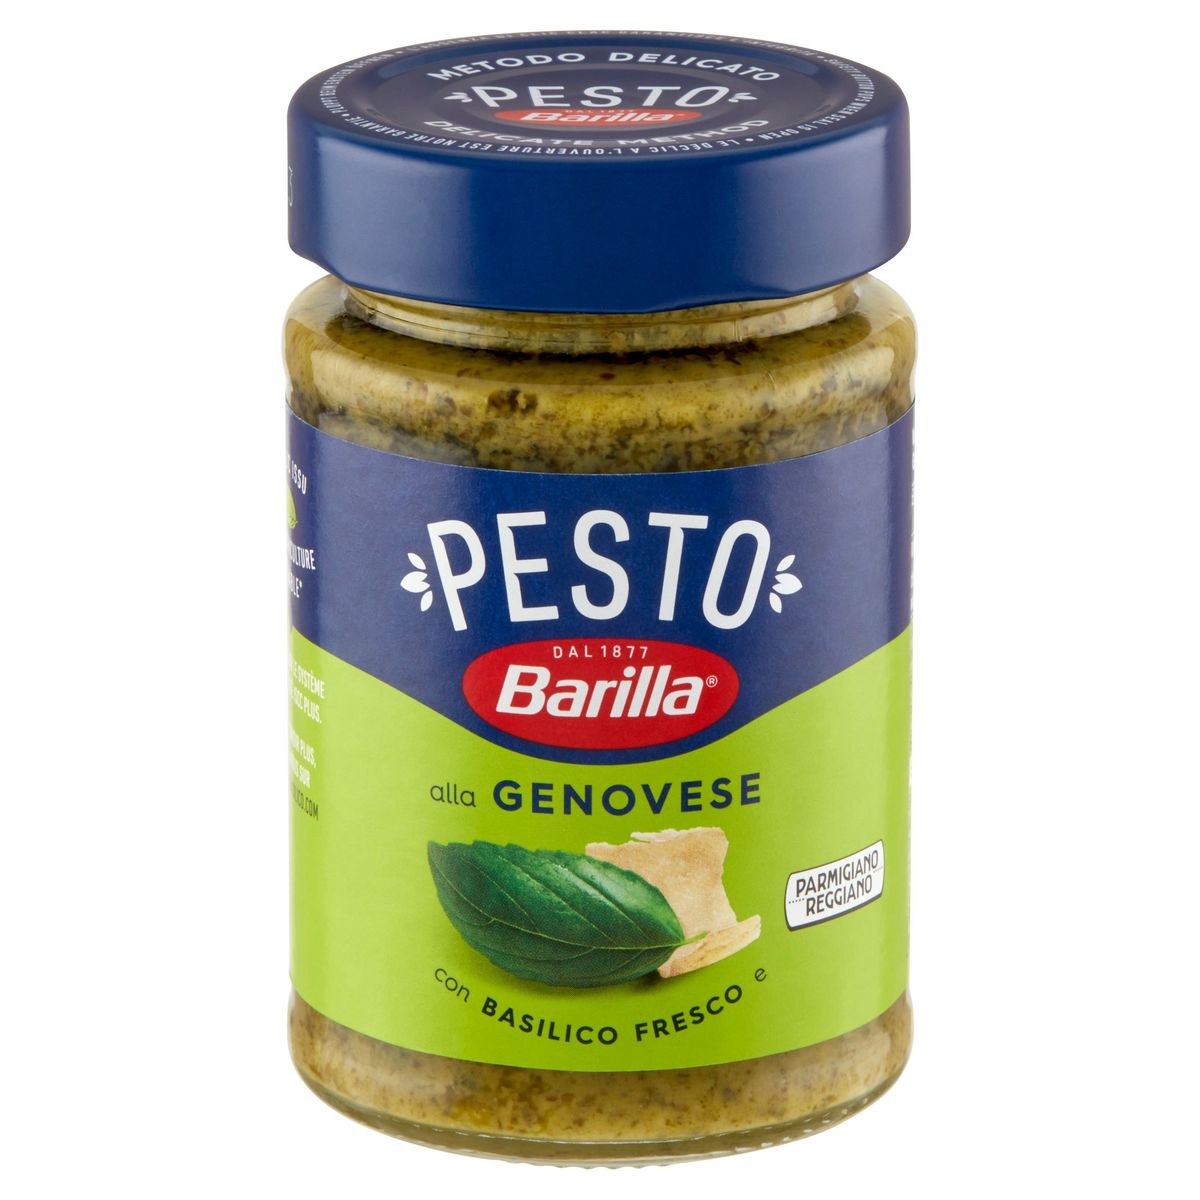 Barilla Saus Pesto alla Genovese basilicum 190g